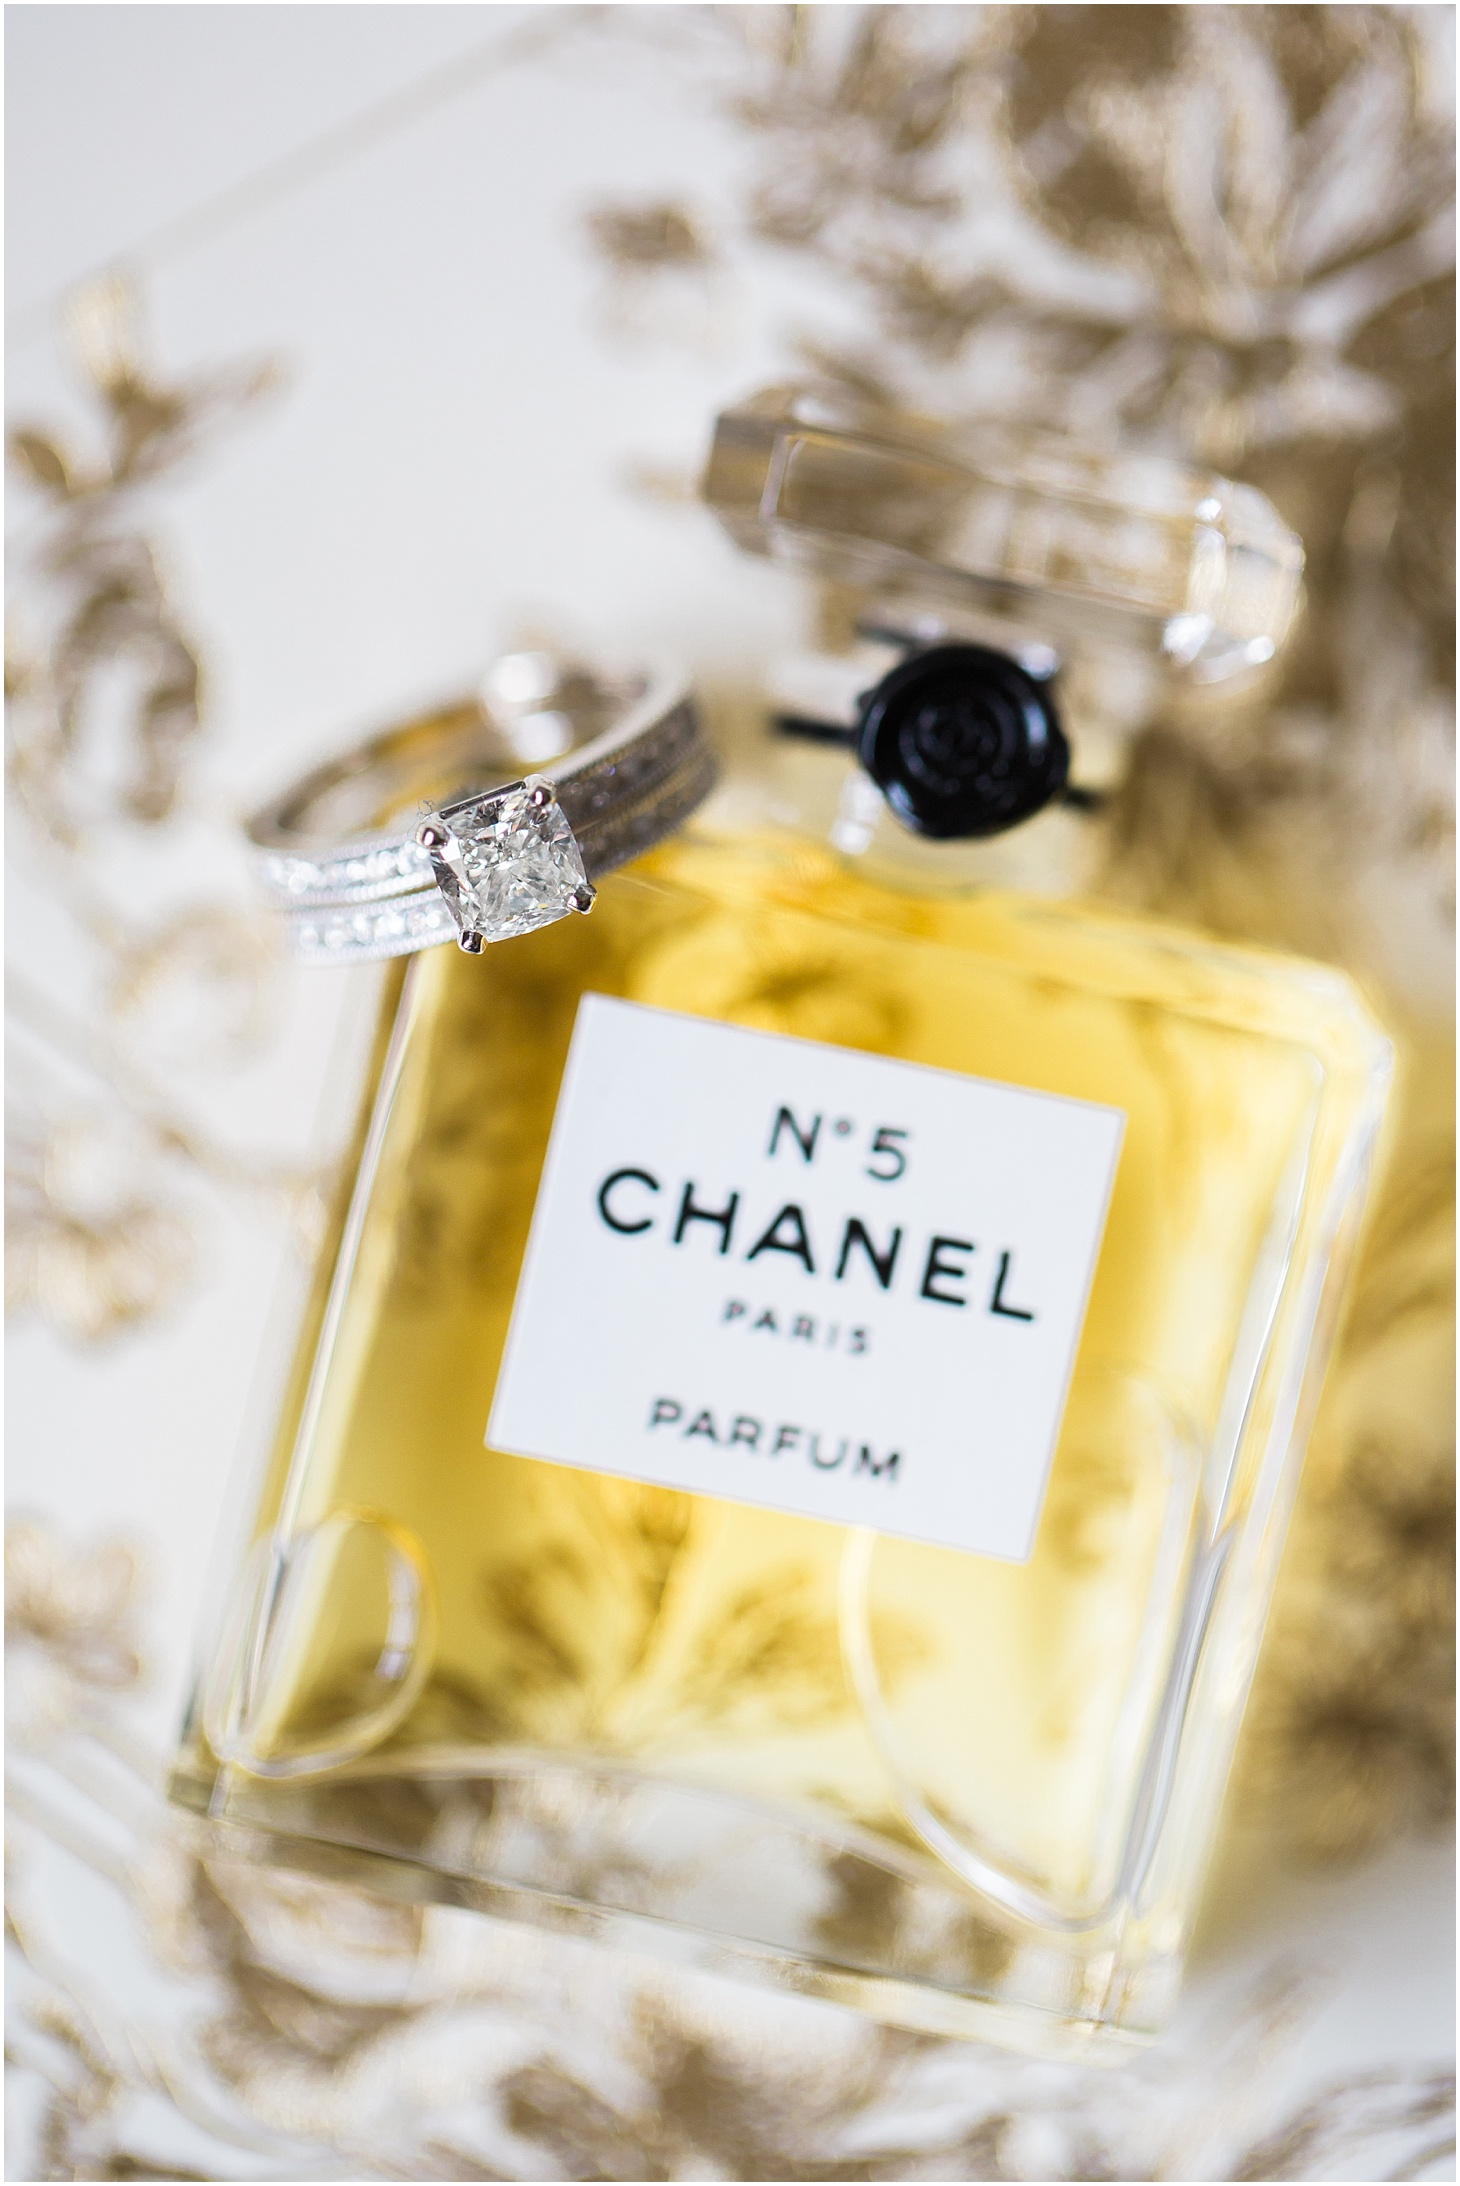 Chanel No. 5 Perfume and Wedding Rings | Interfaith DC Wedding by Sarah Bradshaw Photography